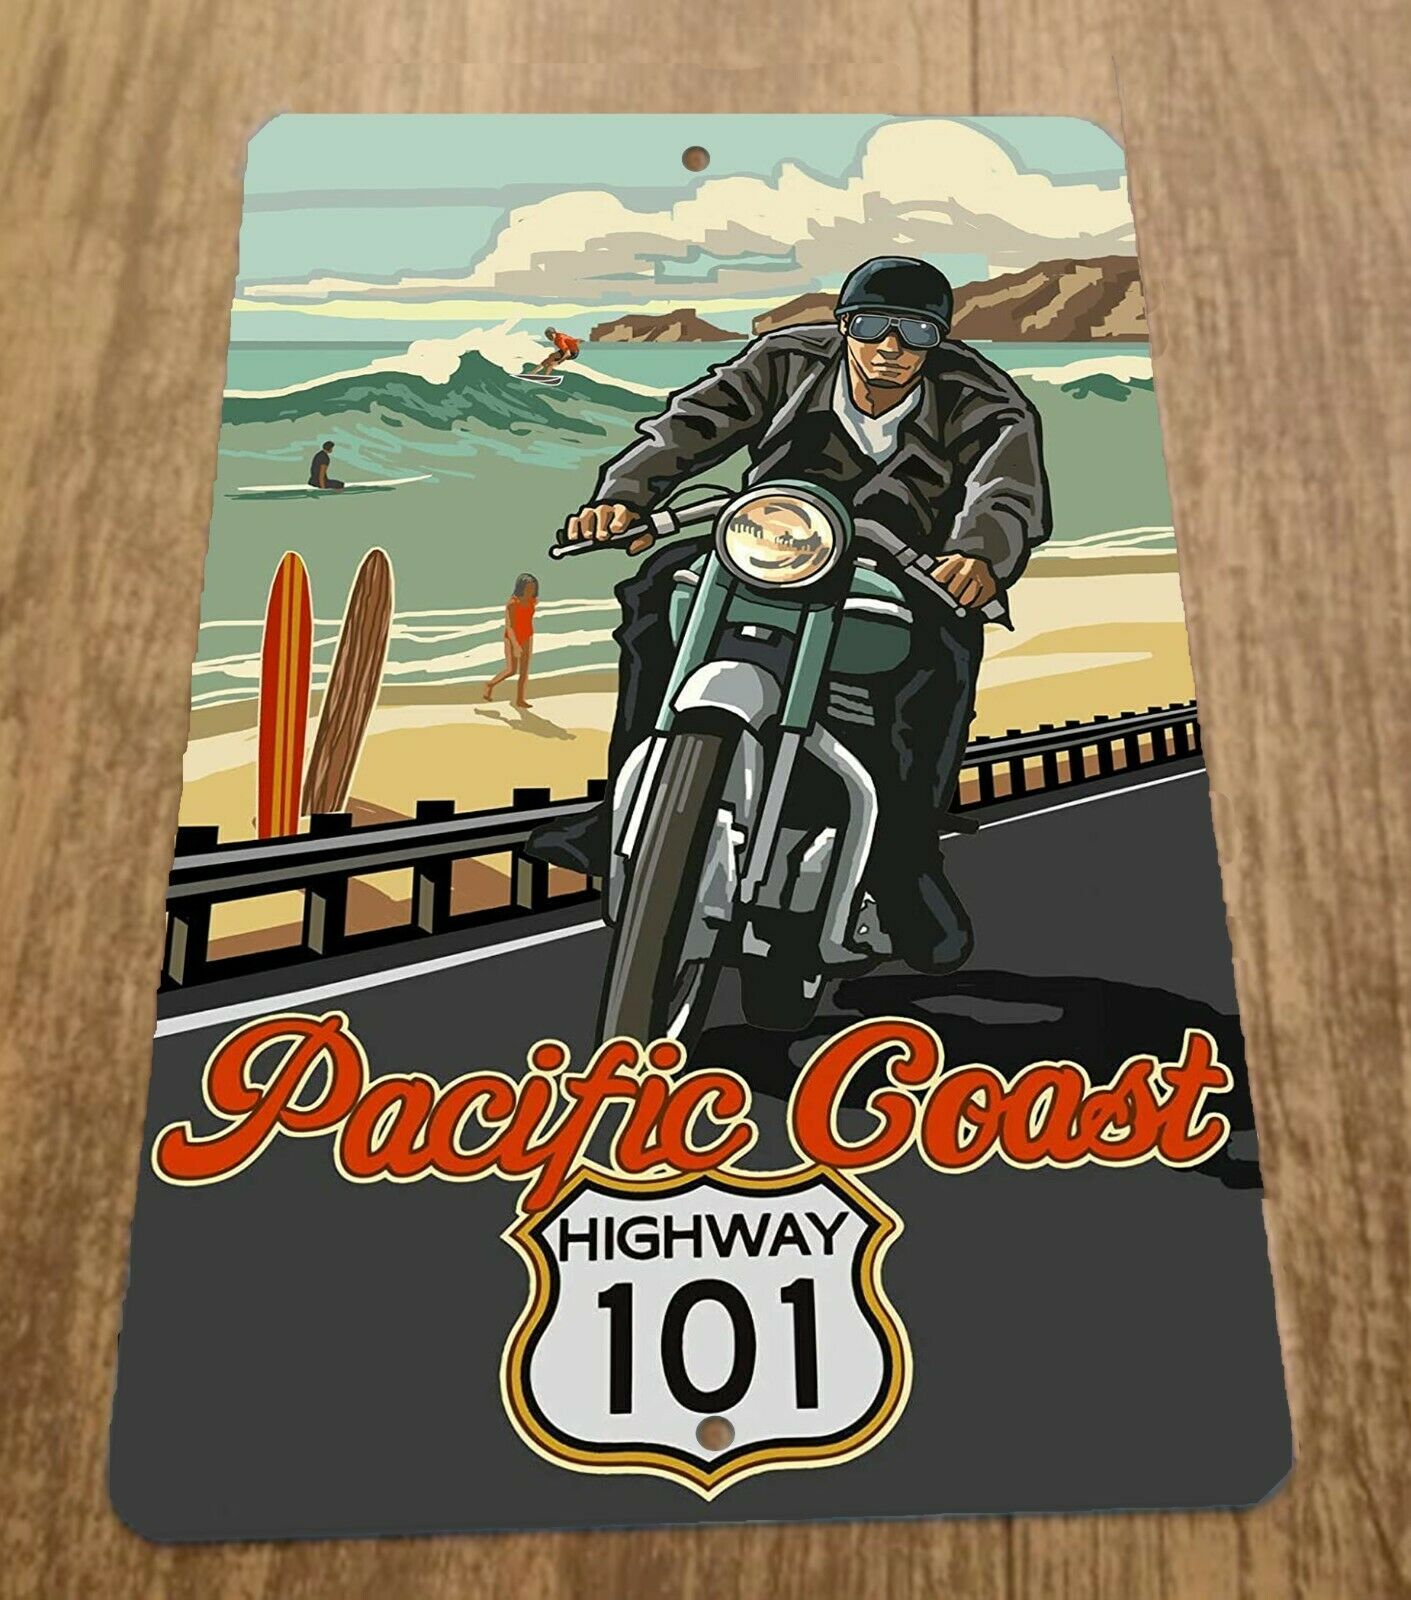 Pacific Coast Highway 101 Vintage Artwork Ad 8x12 Metal Wall Sign Garage Poster Motorcycle